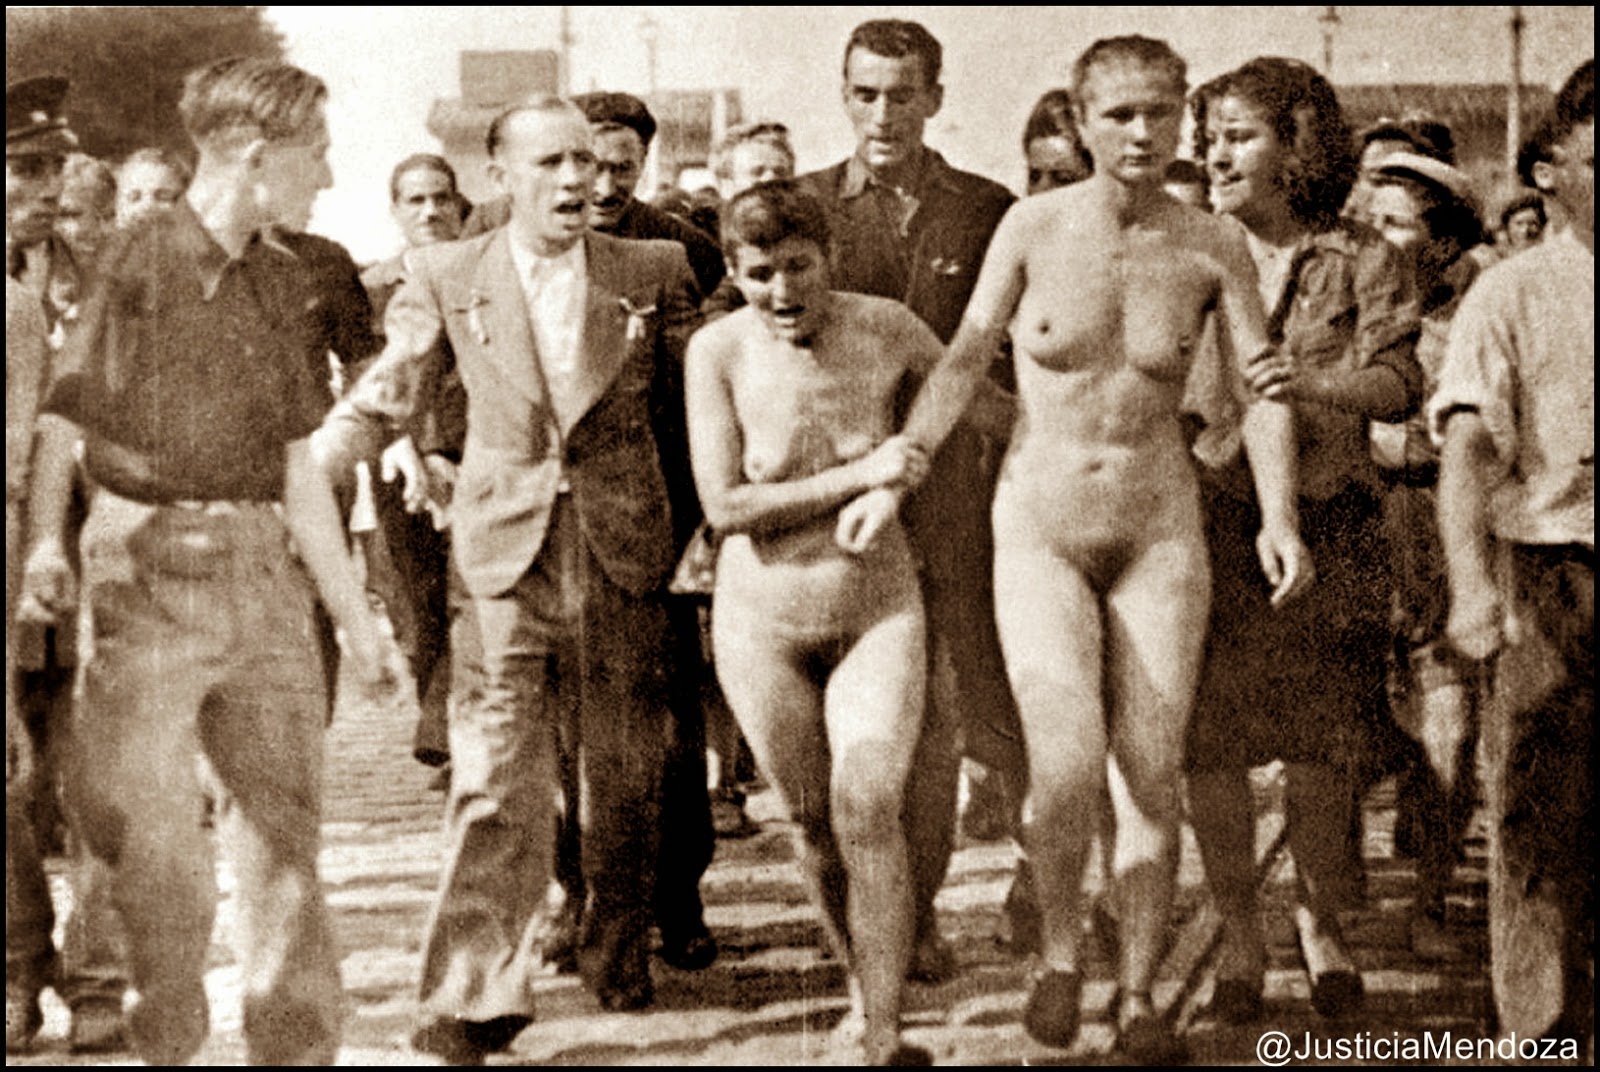 Historical nude photos